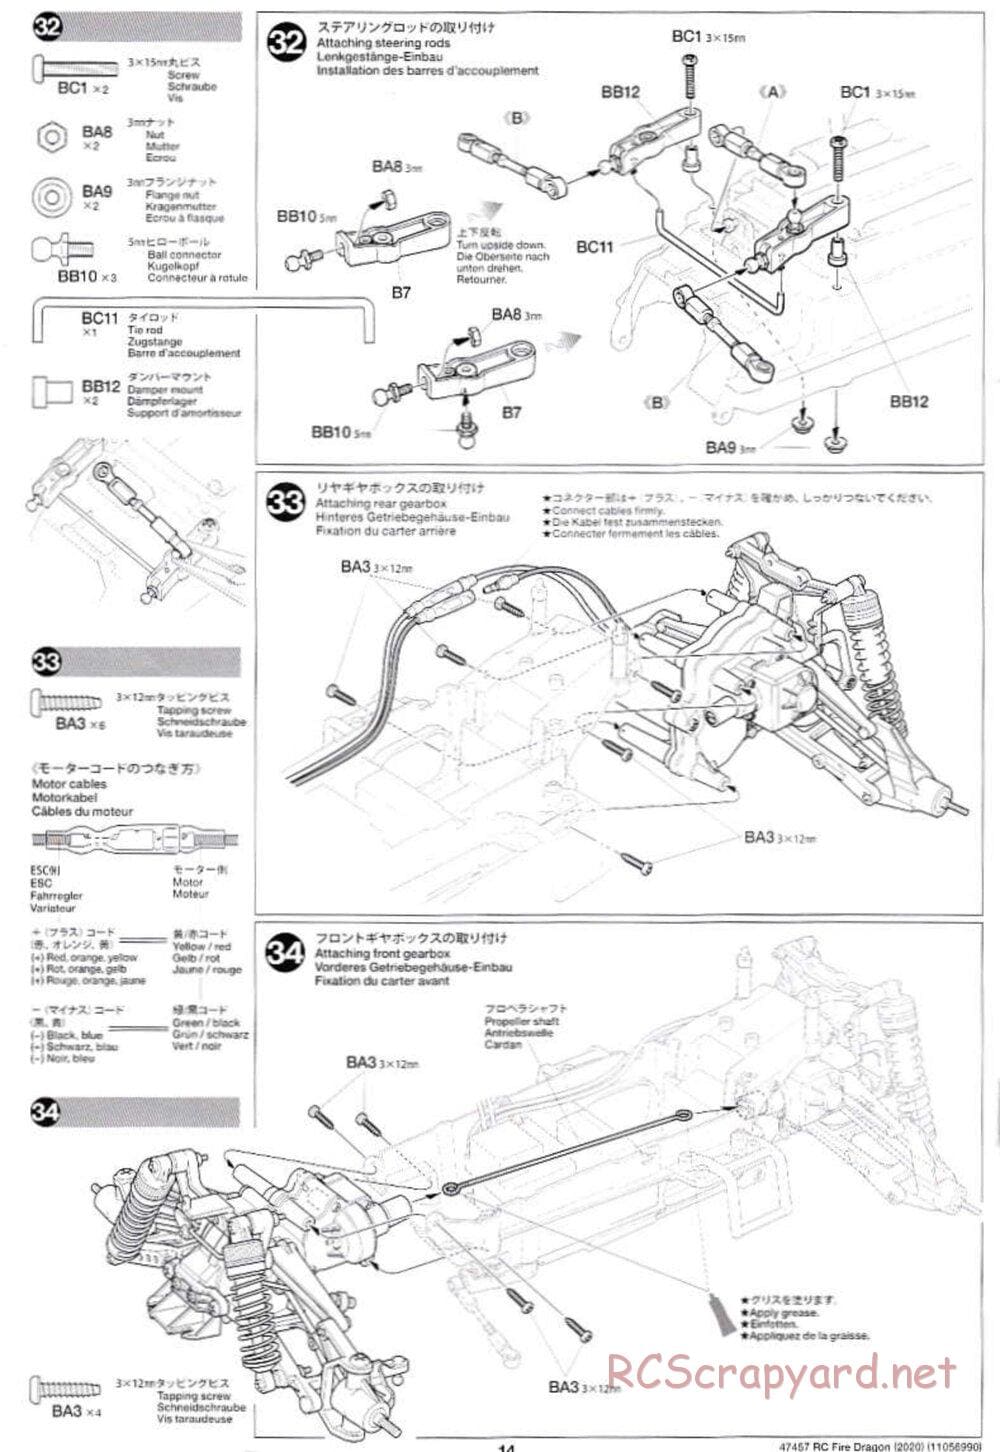 Tamiya - Fire Dragon (2020) Chassis - Manual - Page 14